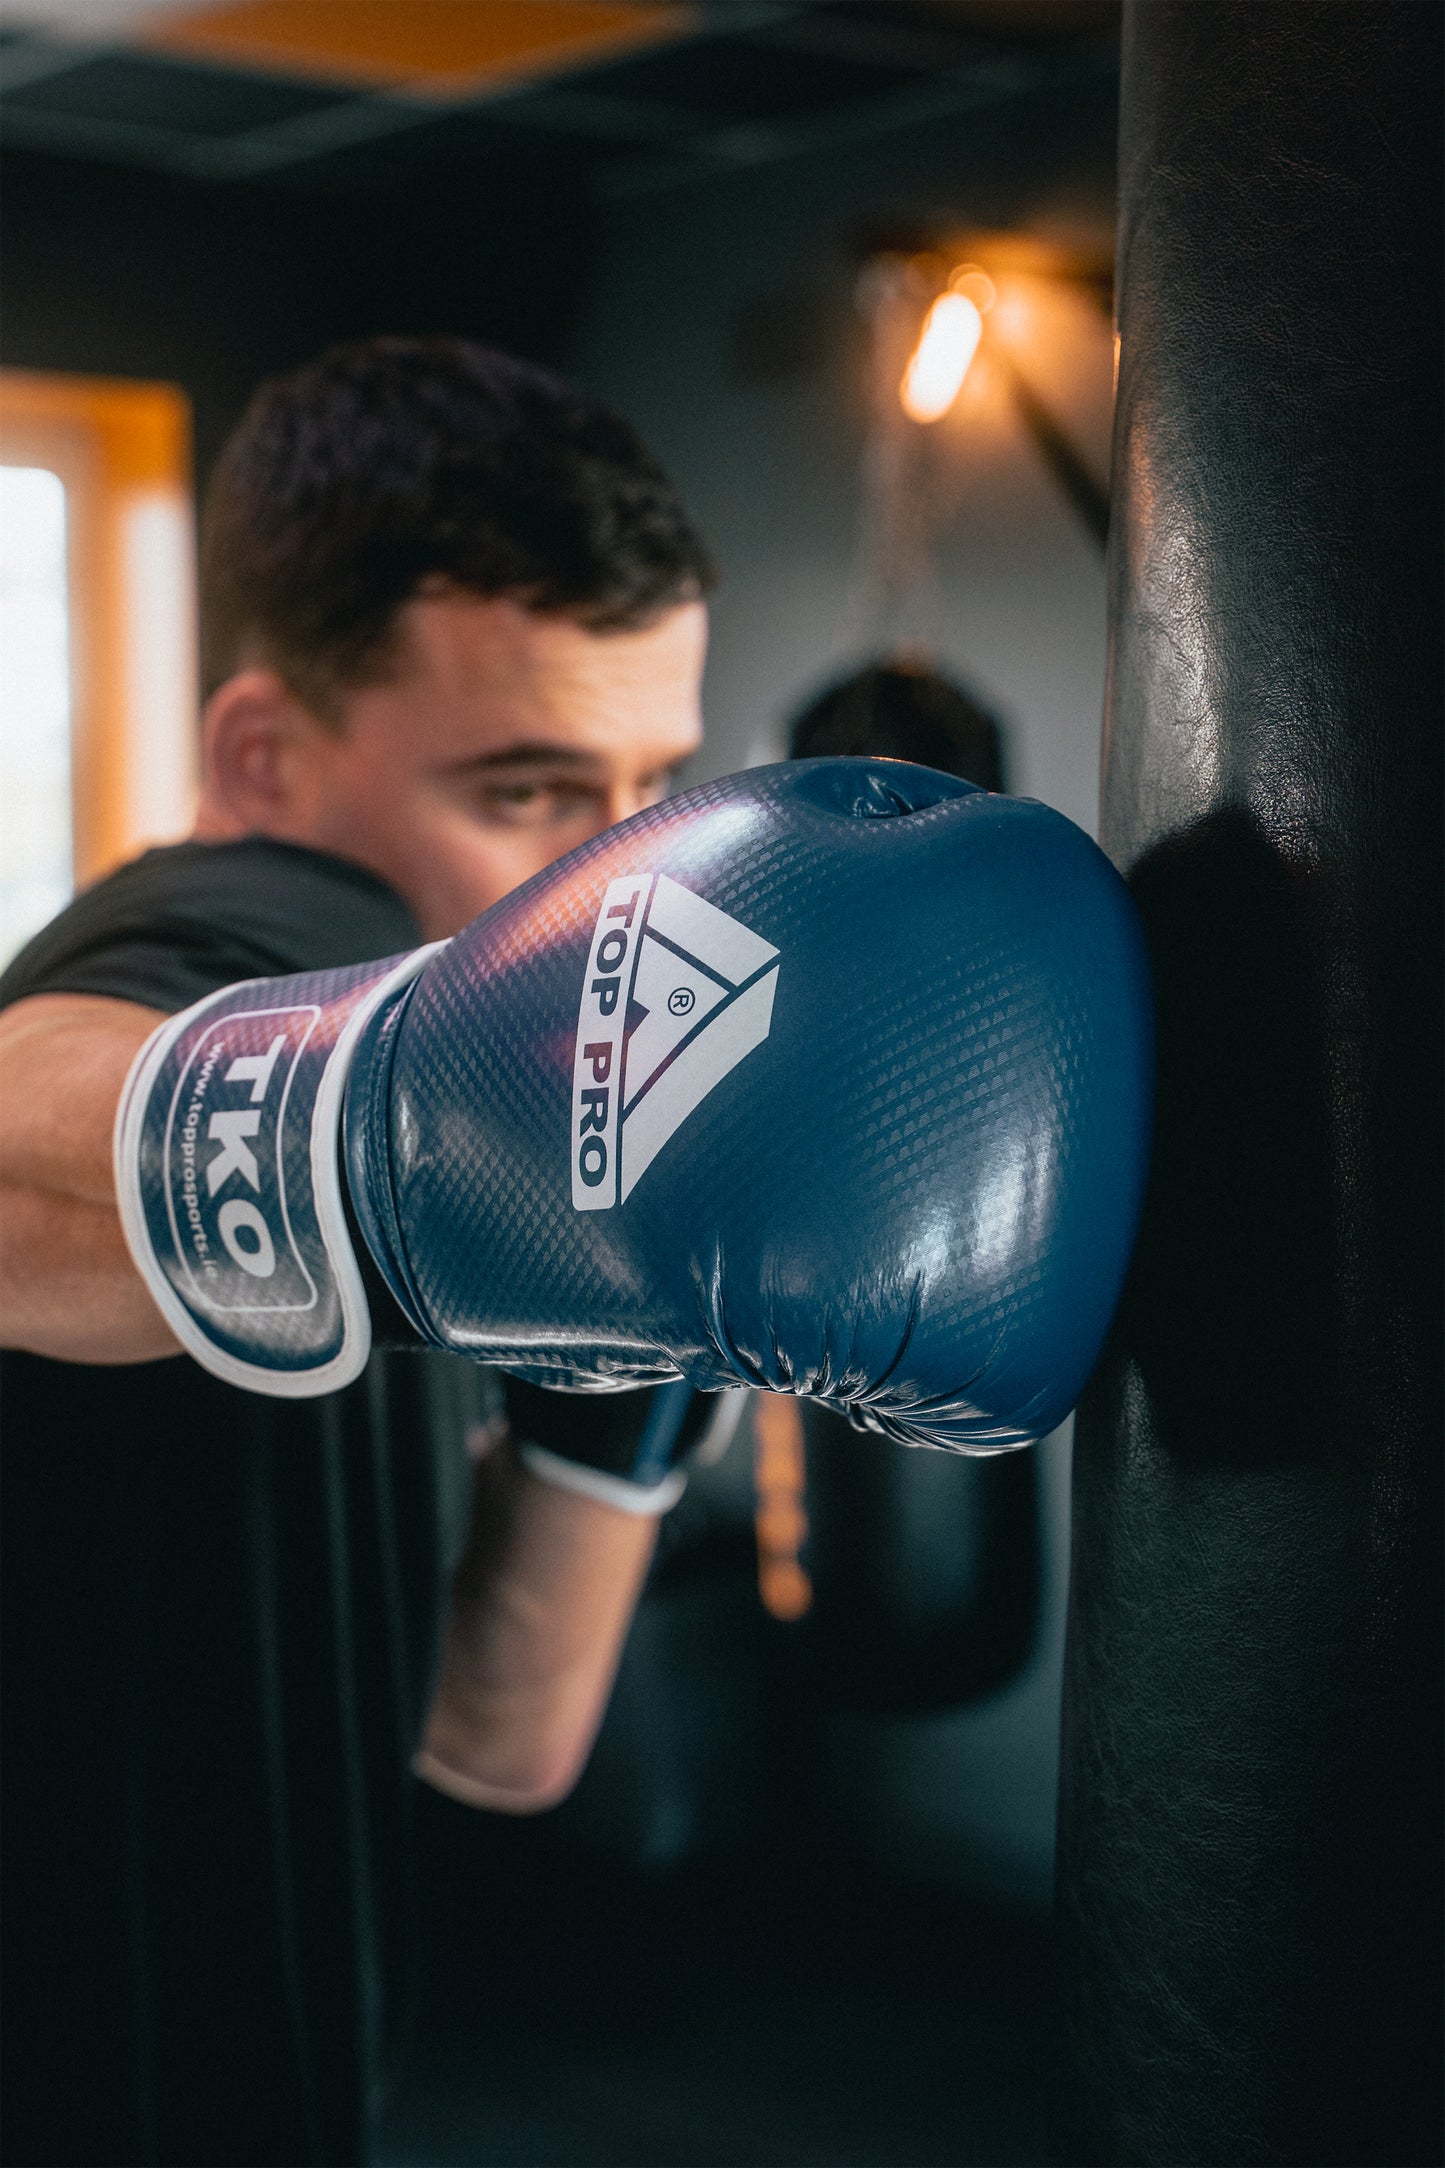 TKO Carbon Boxing Glove